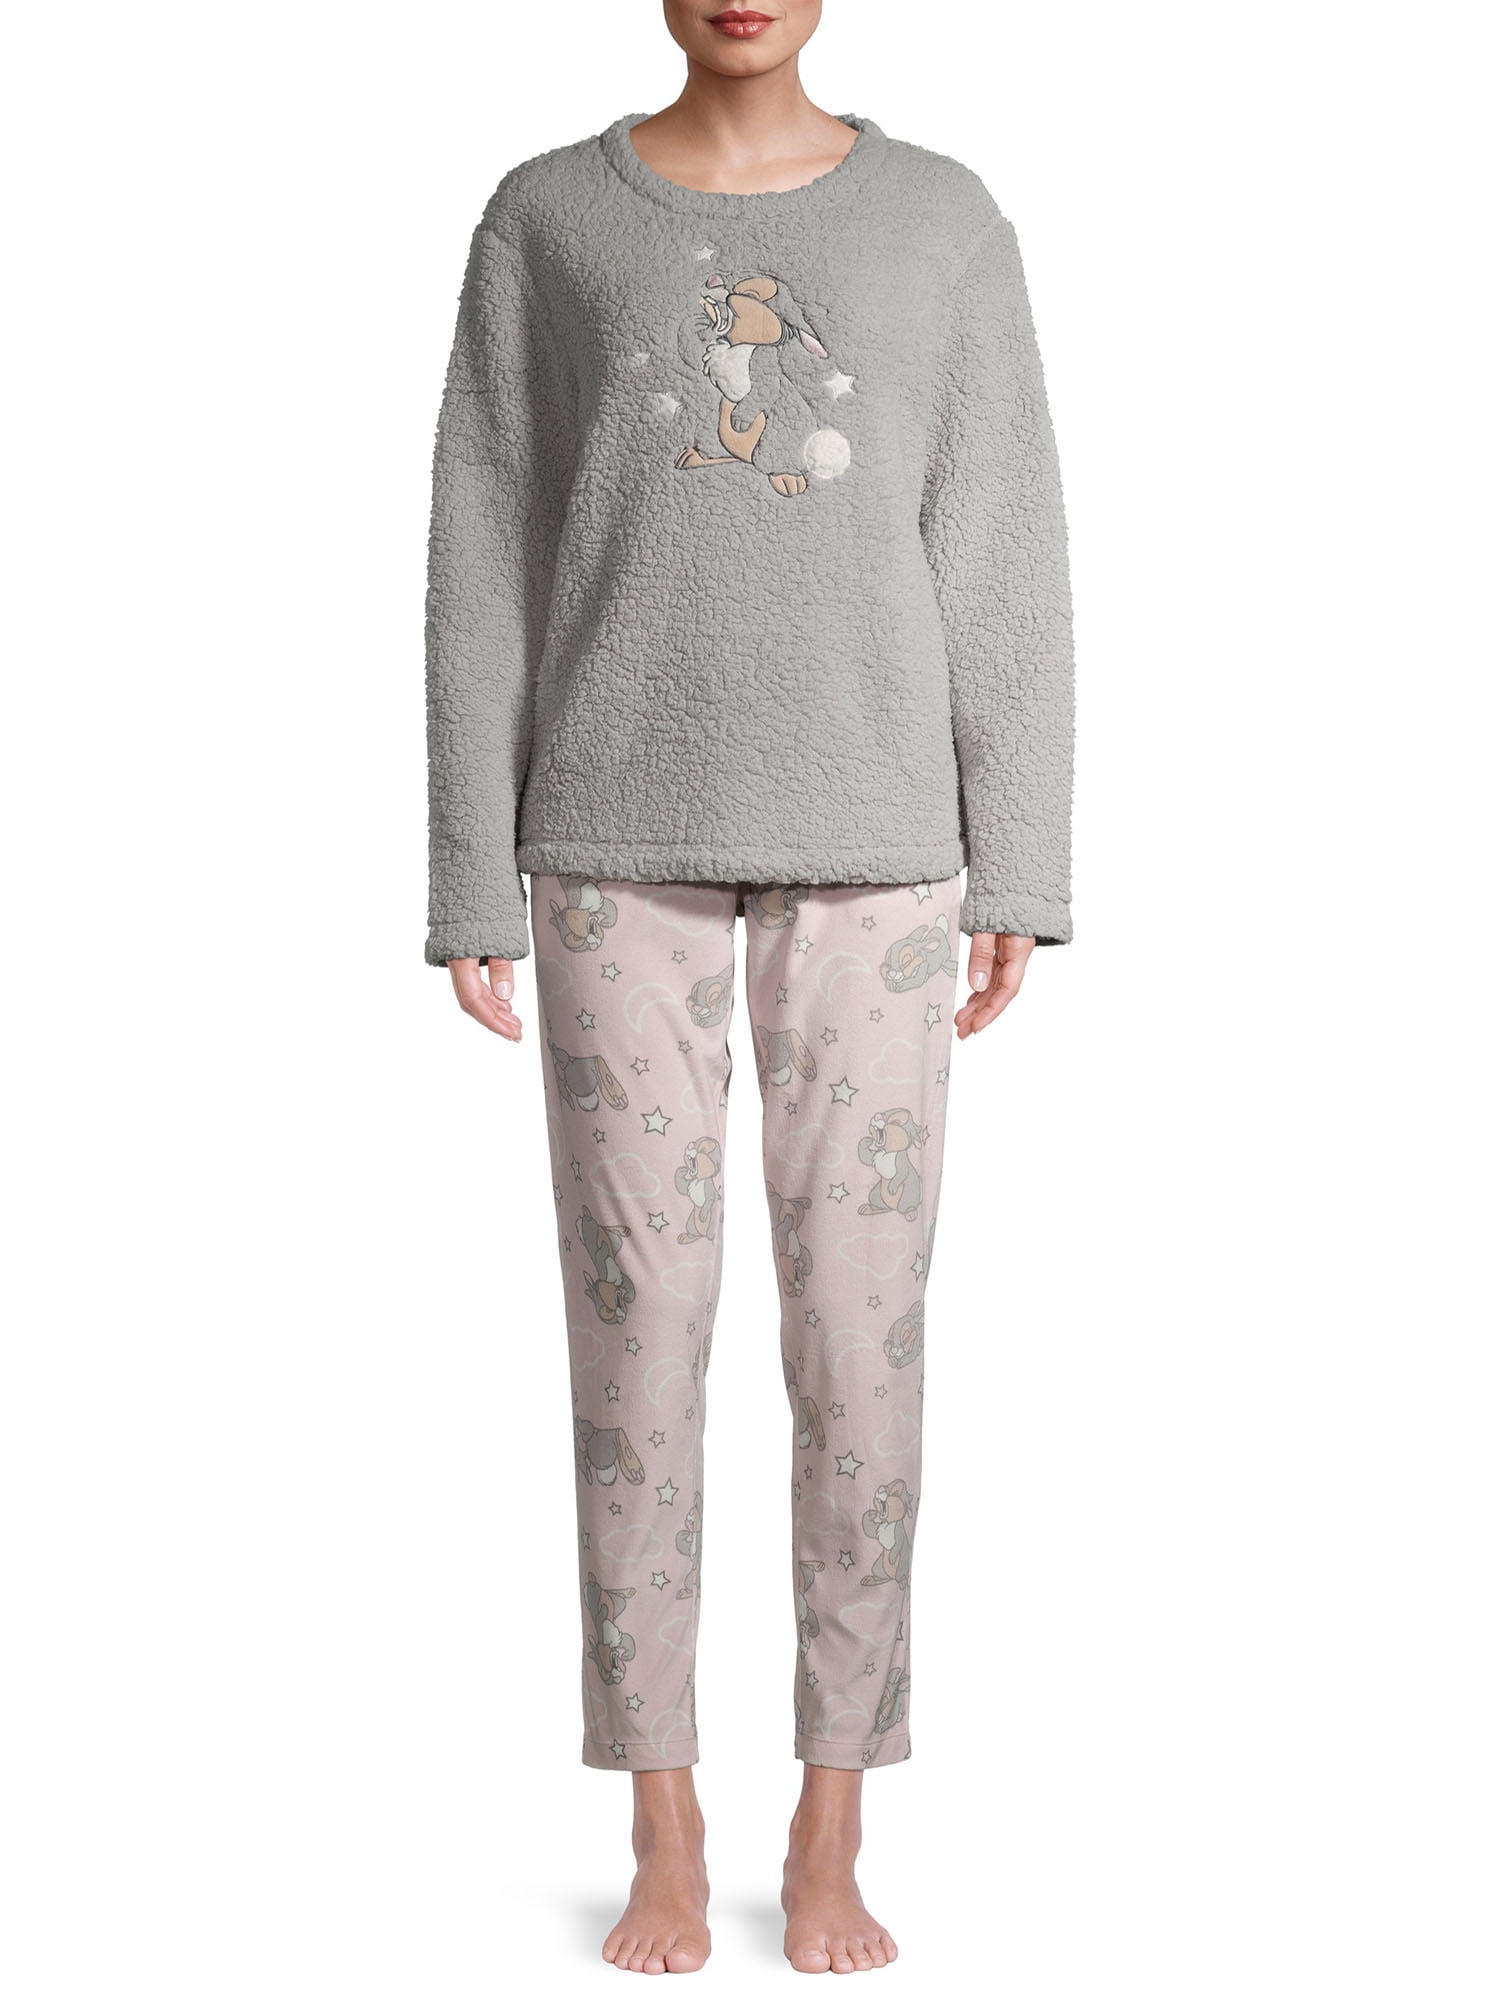 Disney Thumper Grey Hooded Pyjamas Sizes 8-22 OR MATCHING DOUBLE DUVET 